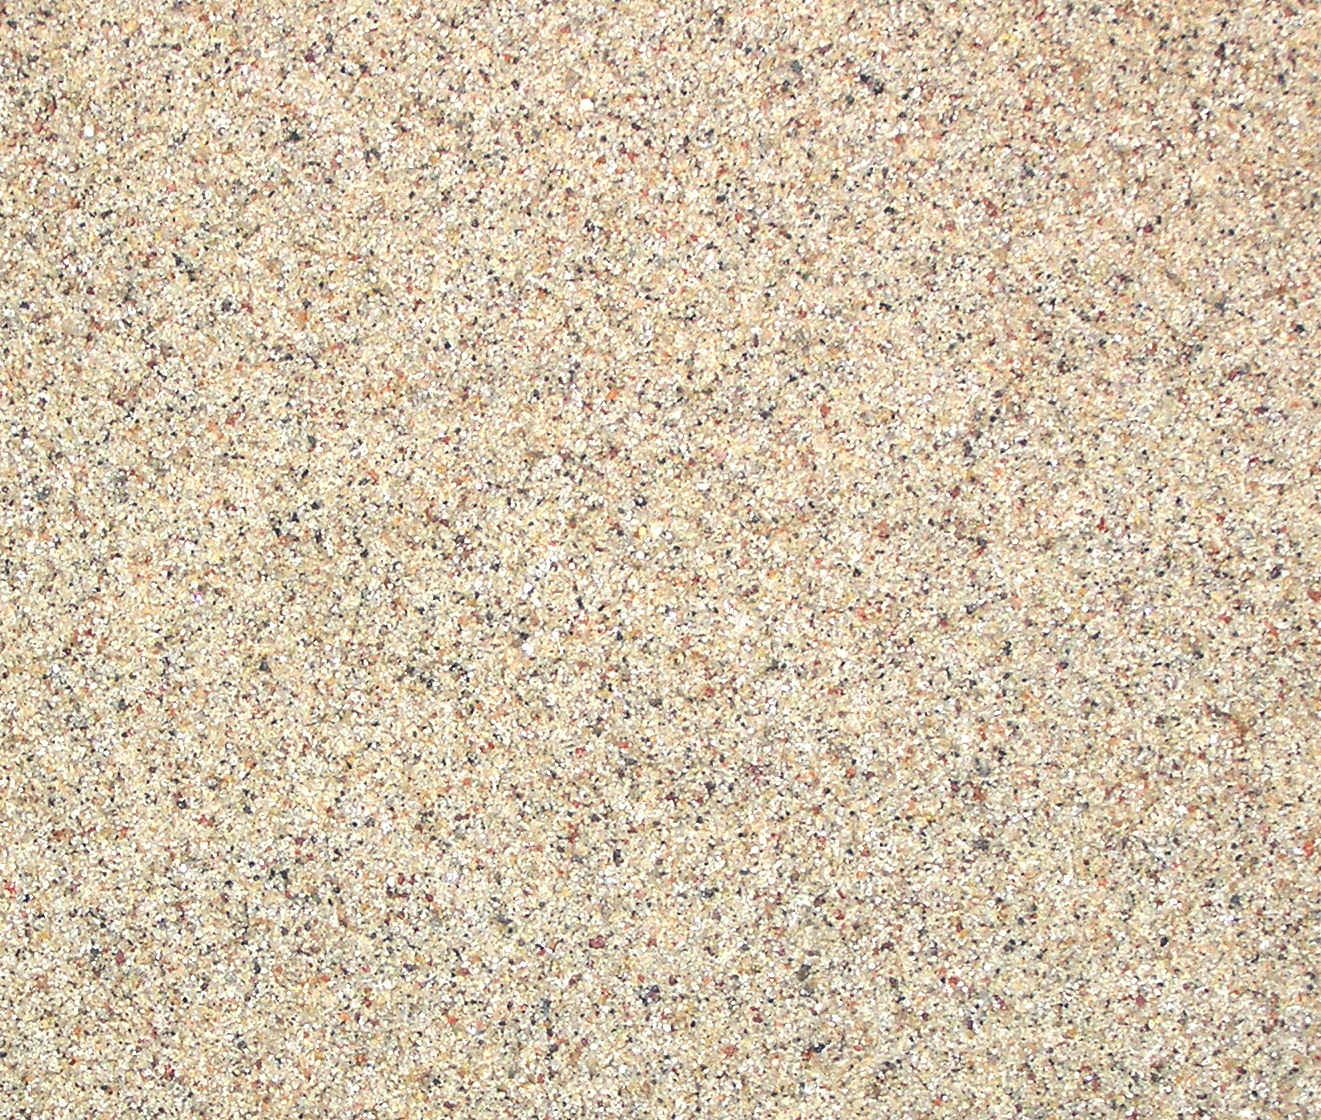 Sand4560